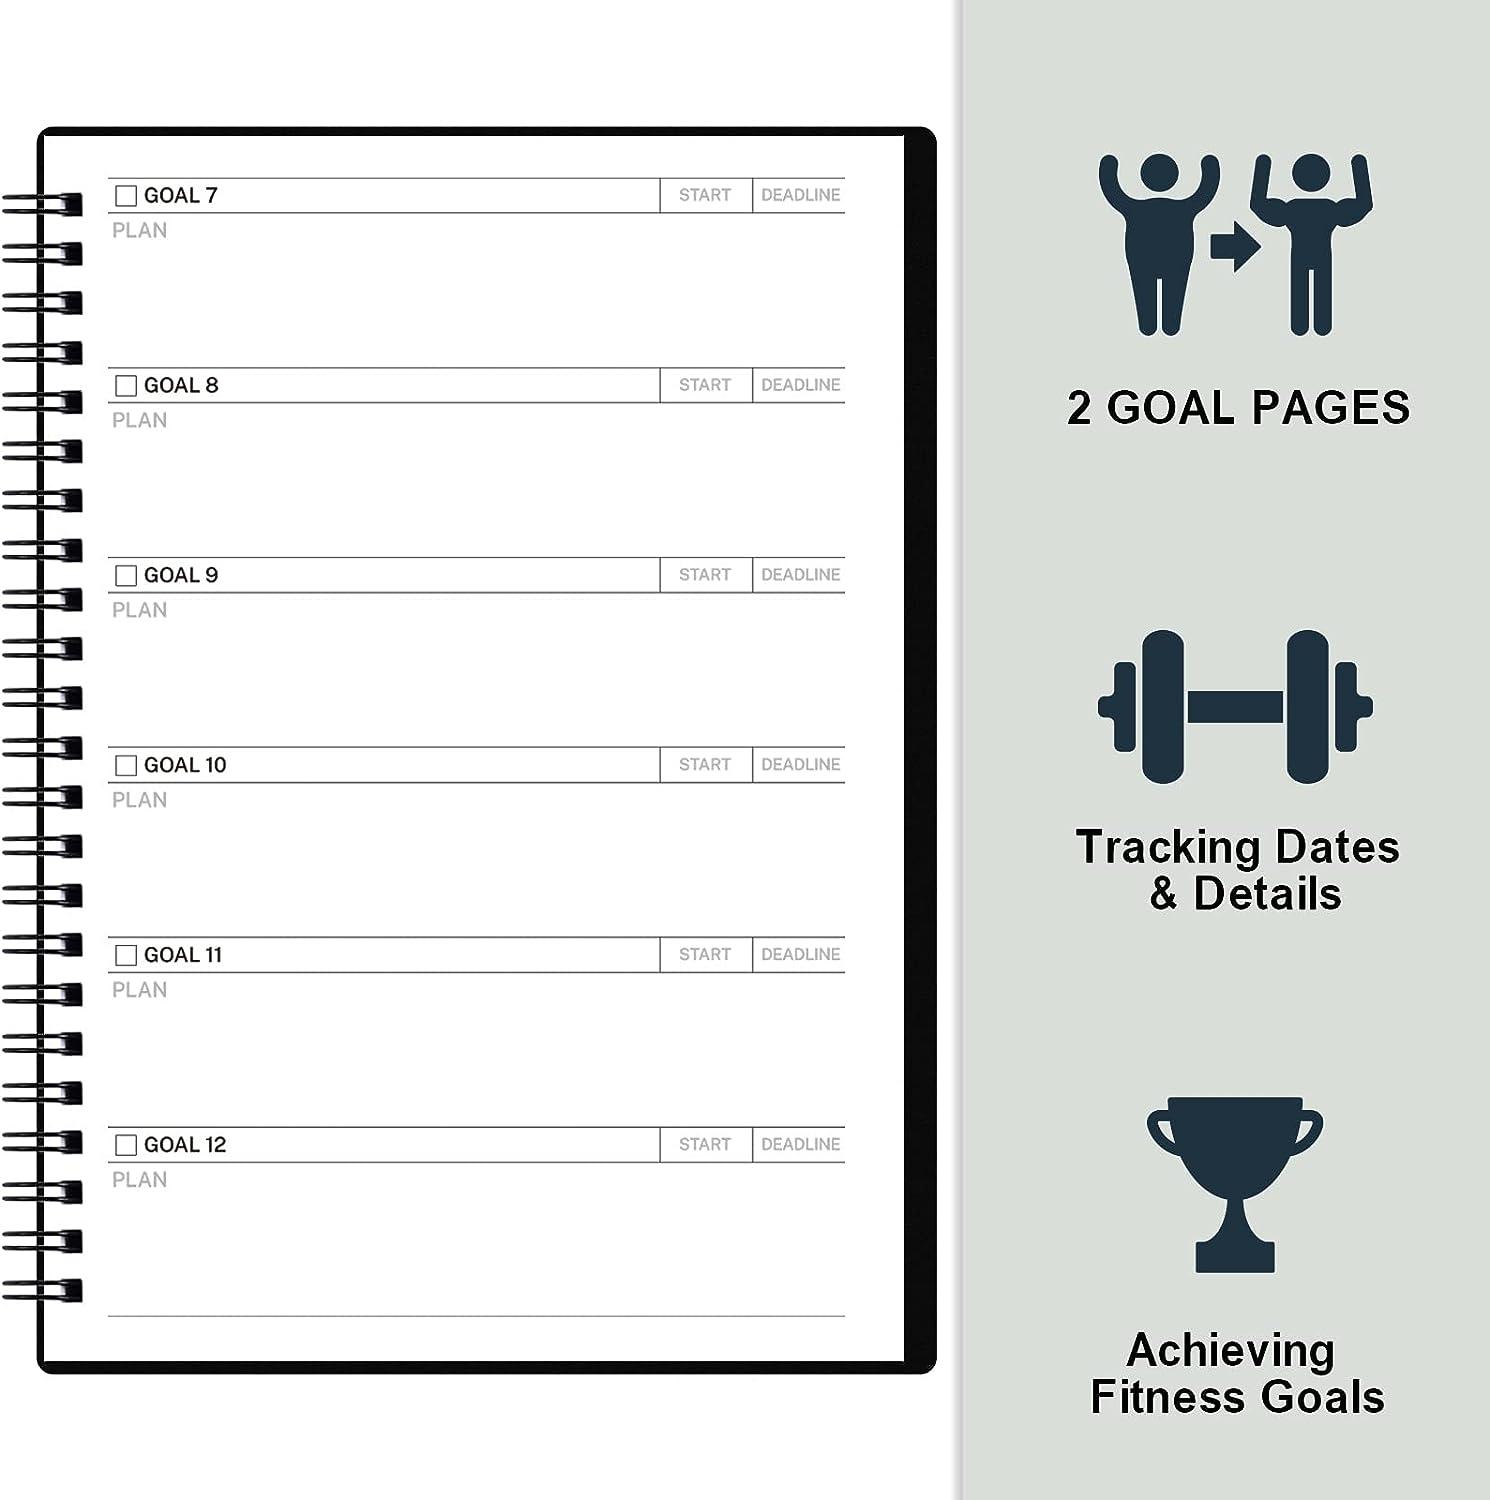 FREE Printable Fitness Journal  Fitness planner printable, Fitness tracker  printable, Fitness journal